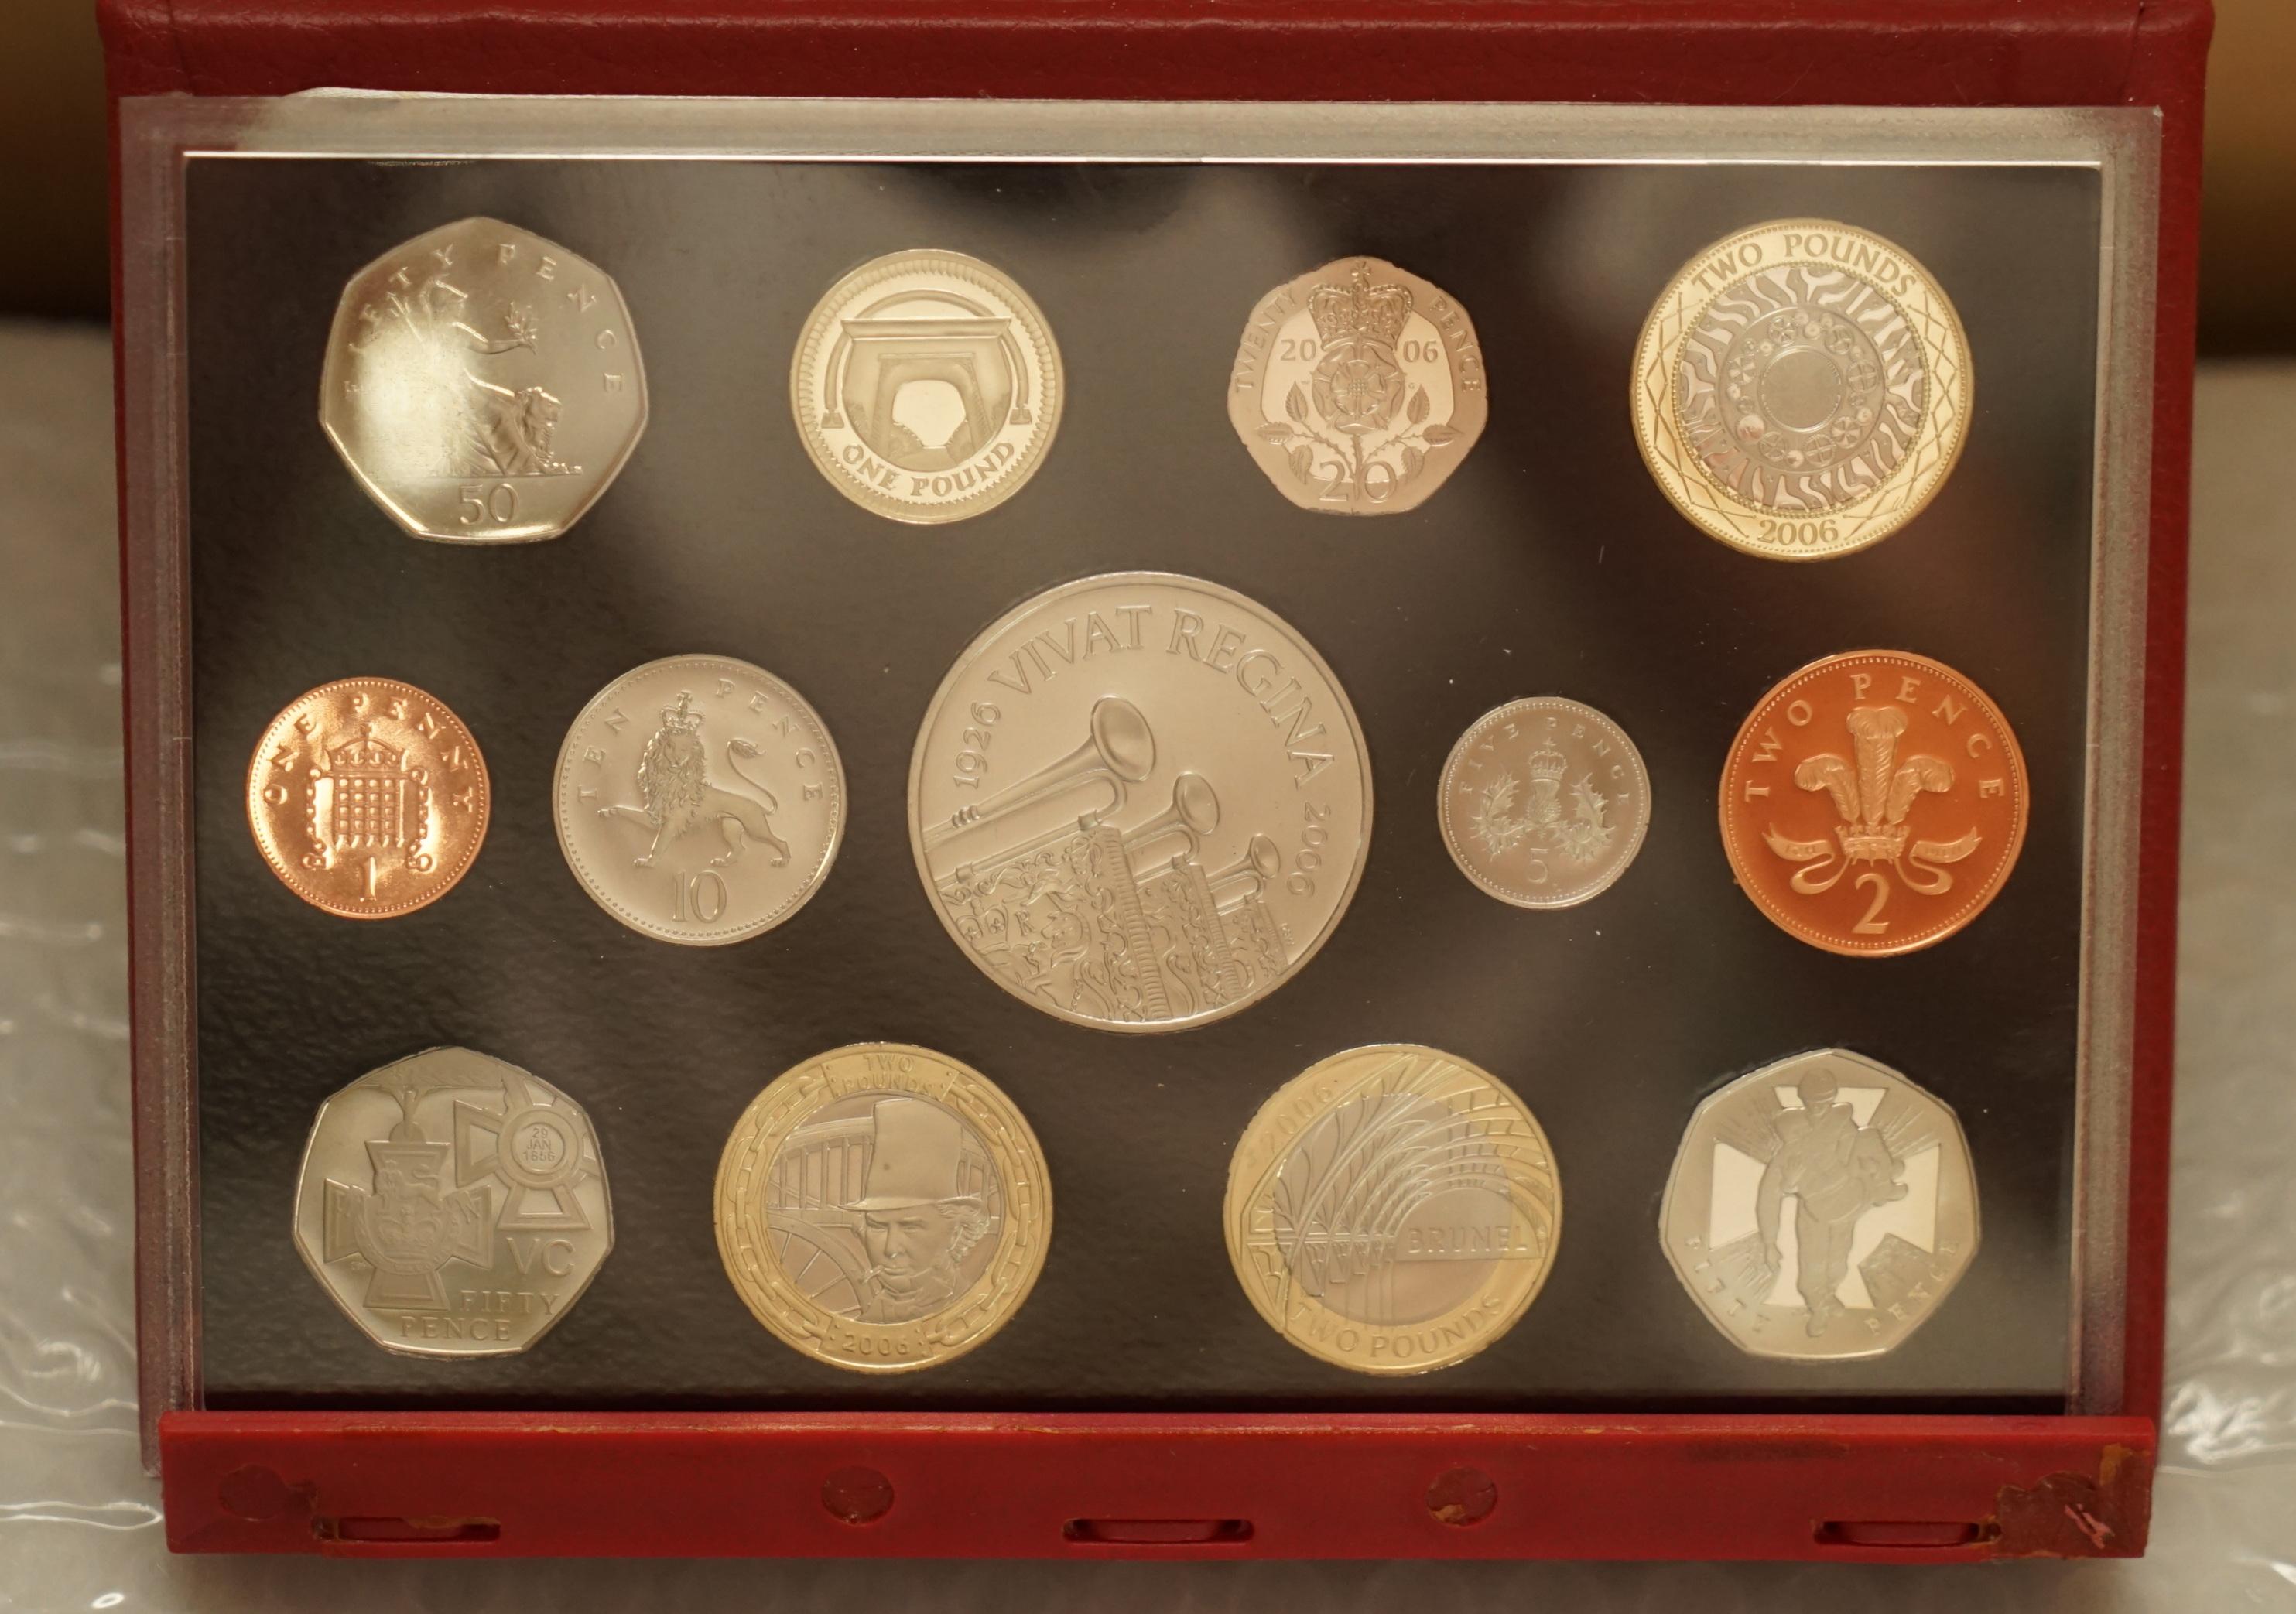 13 Coin Royal Mint 1926, 2006 Queen Elizabeth Proof Set with £5 Vivat Regina 2